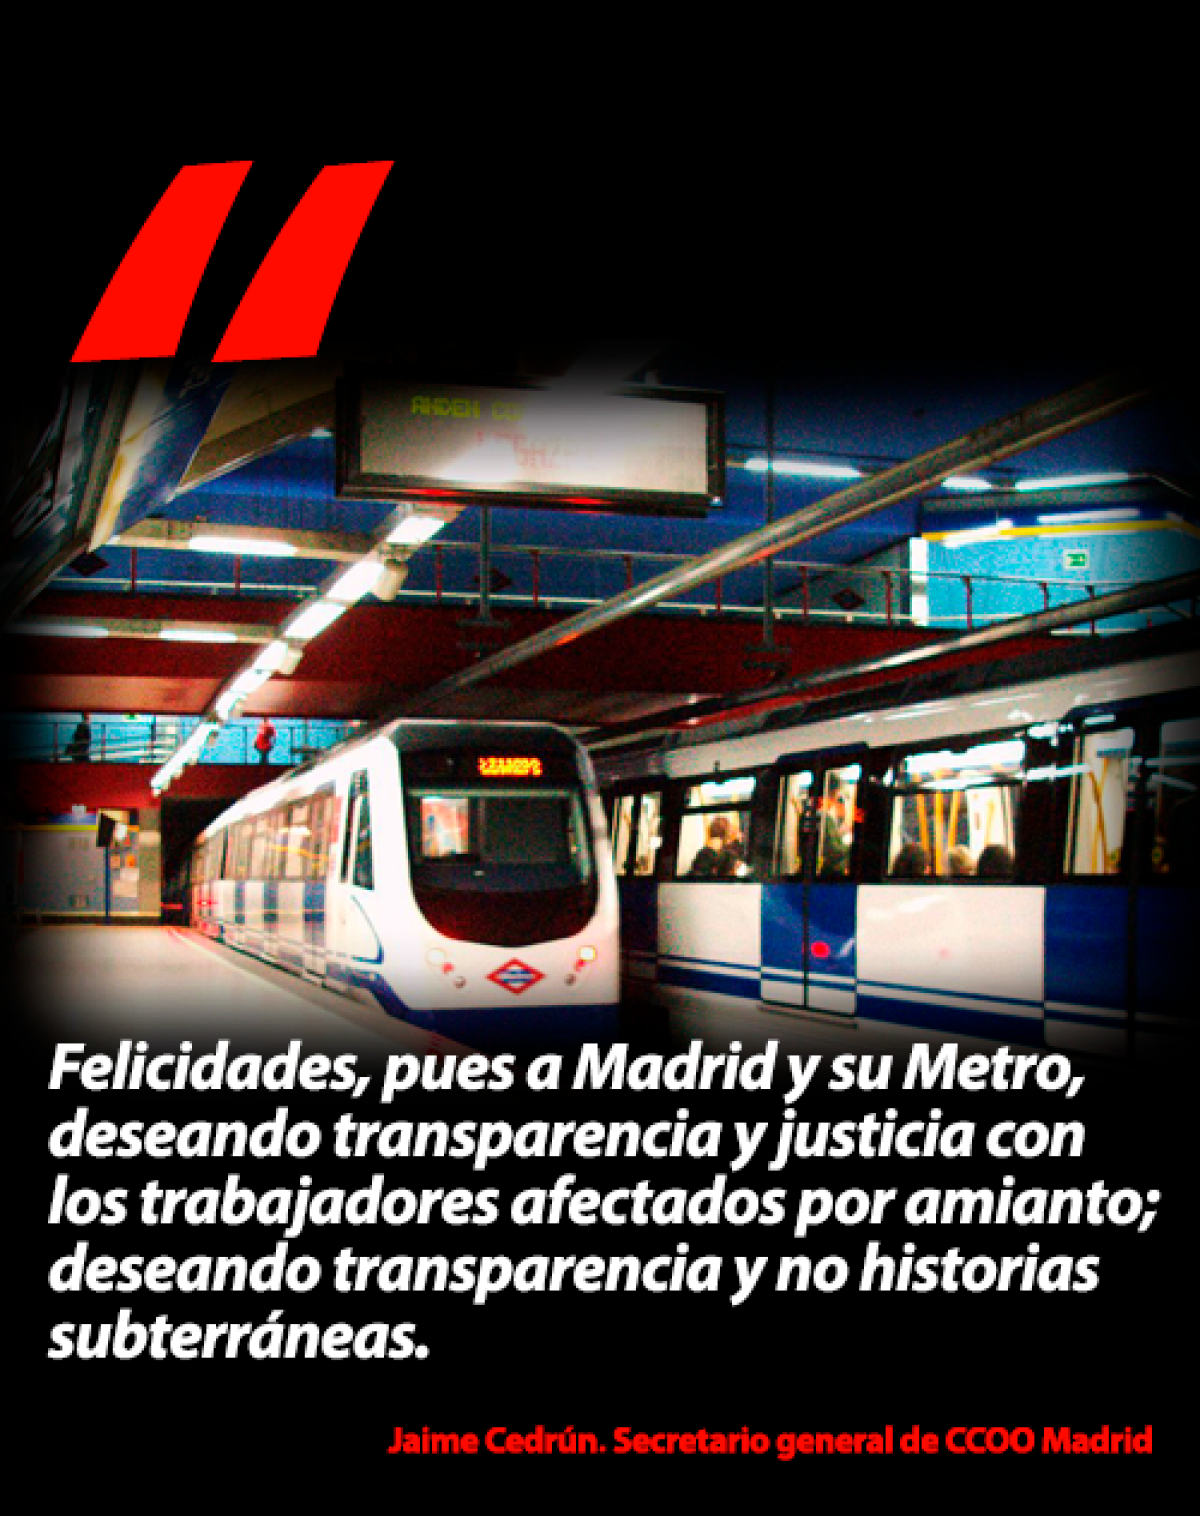 100 años de Metro e historias subterráneas